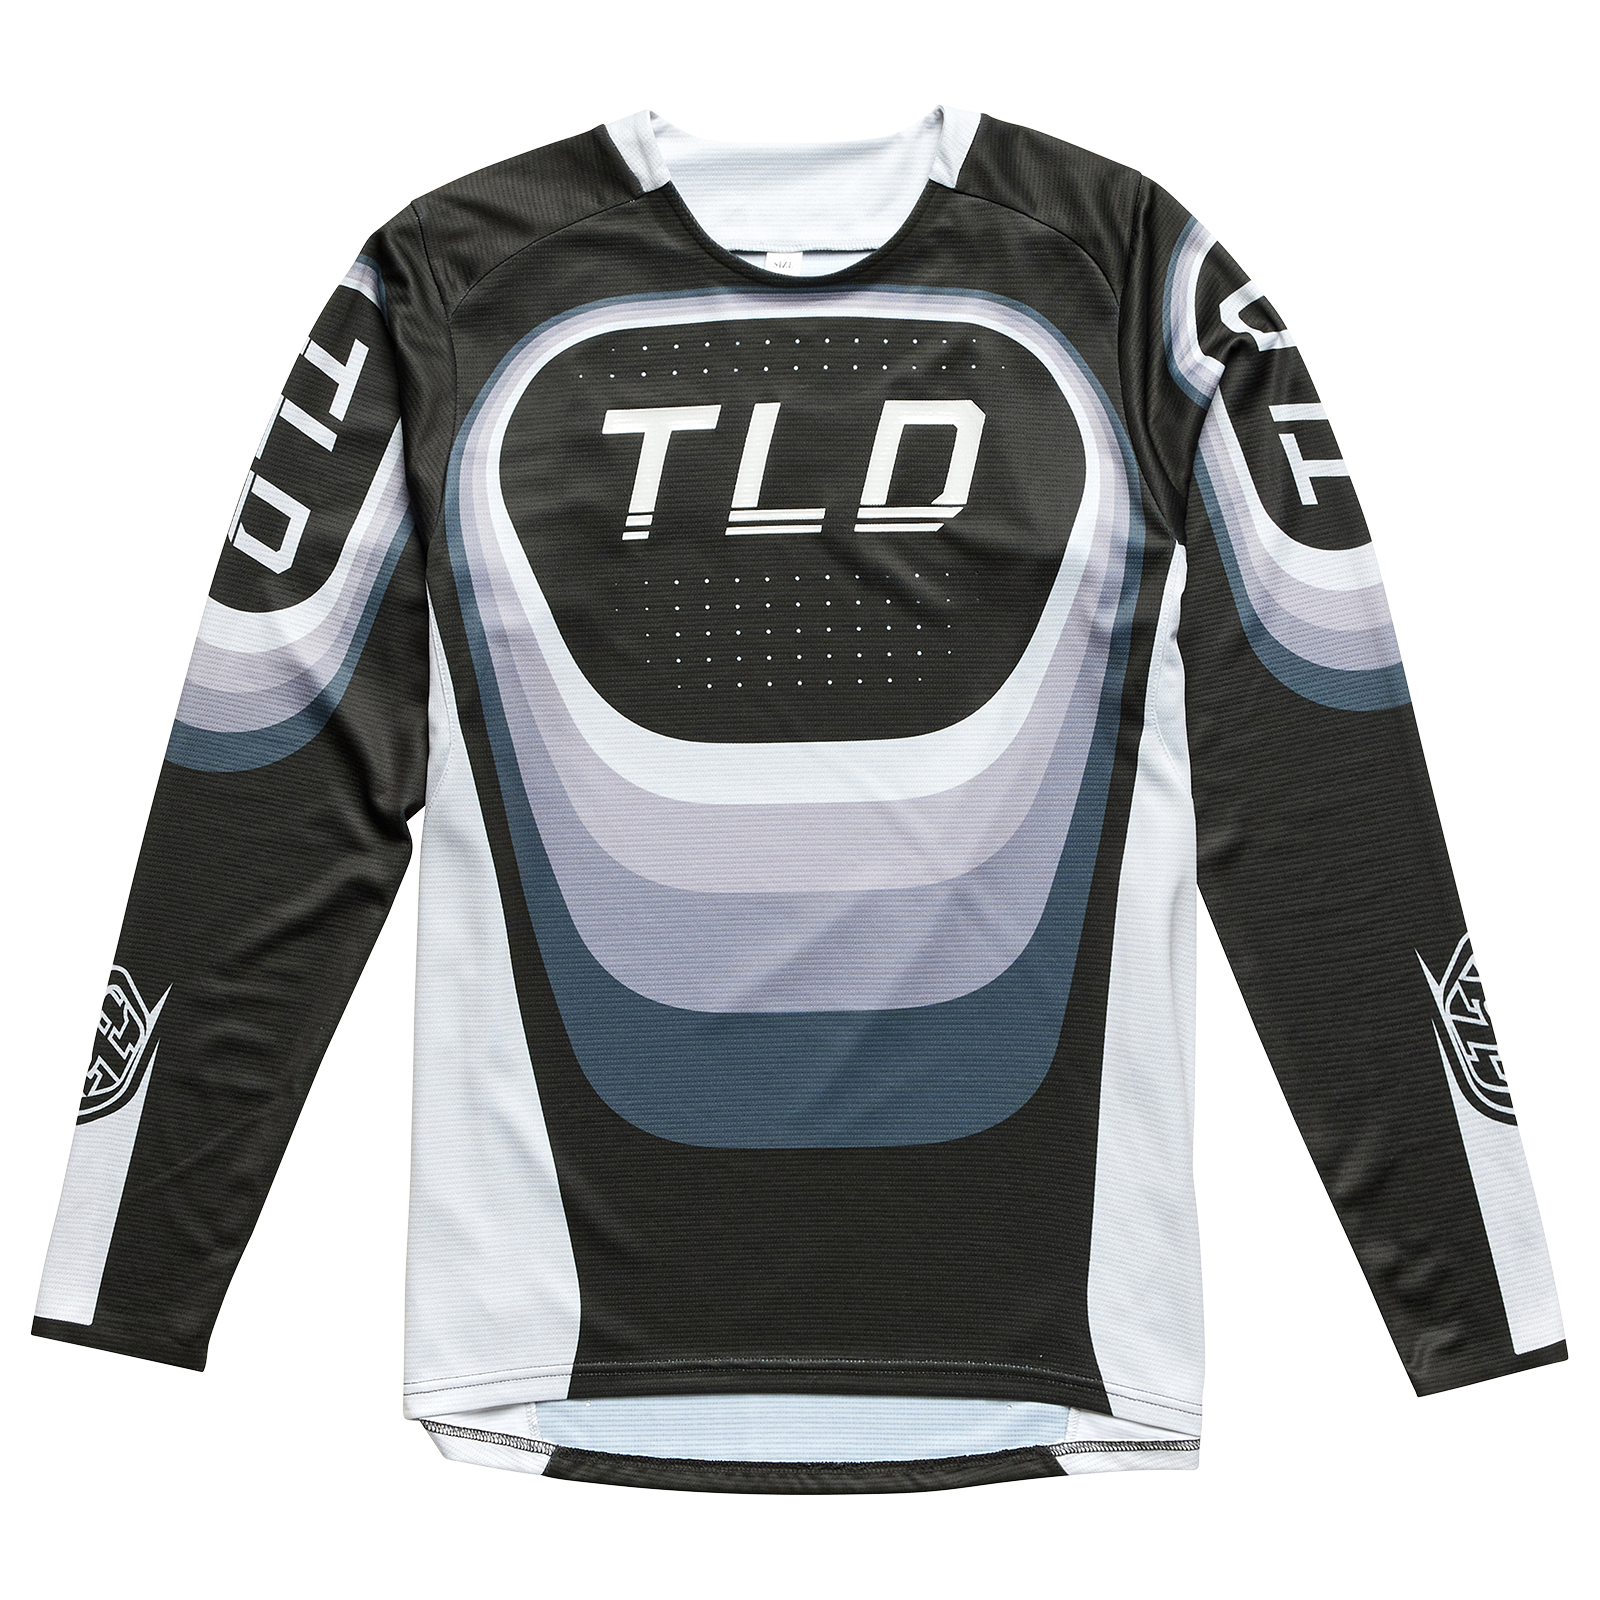 TLD Sprint Jersey Reverb Black race long sleeve jersey with ventilation.